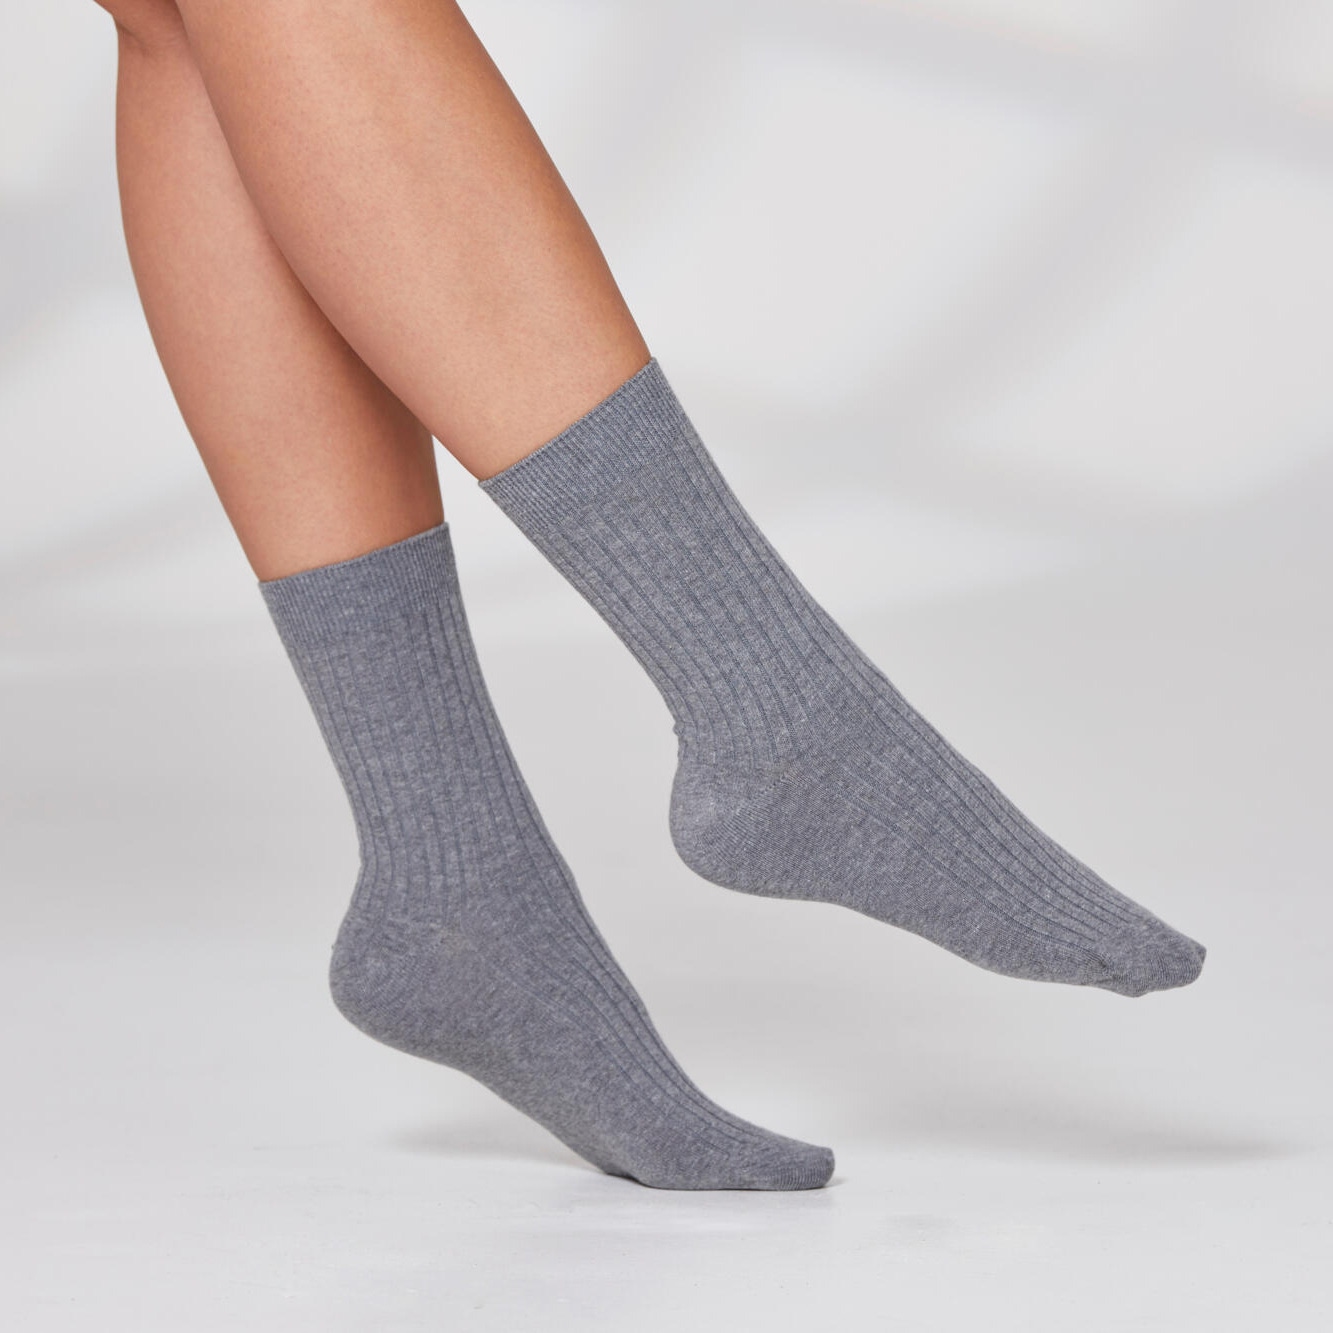 Unisex-Komfort-Socken mit Ripp-Struktur, 3er-Pack